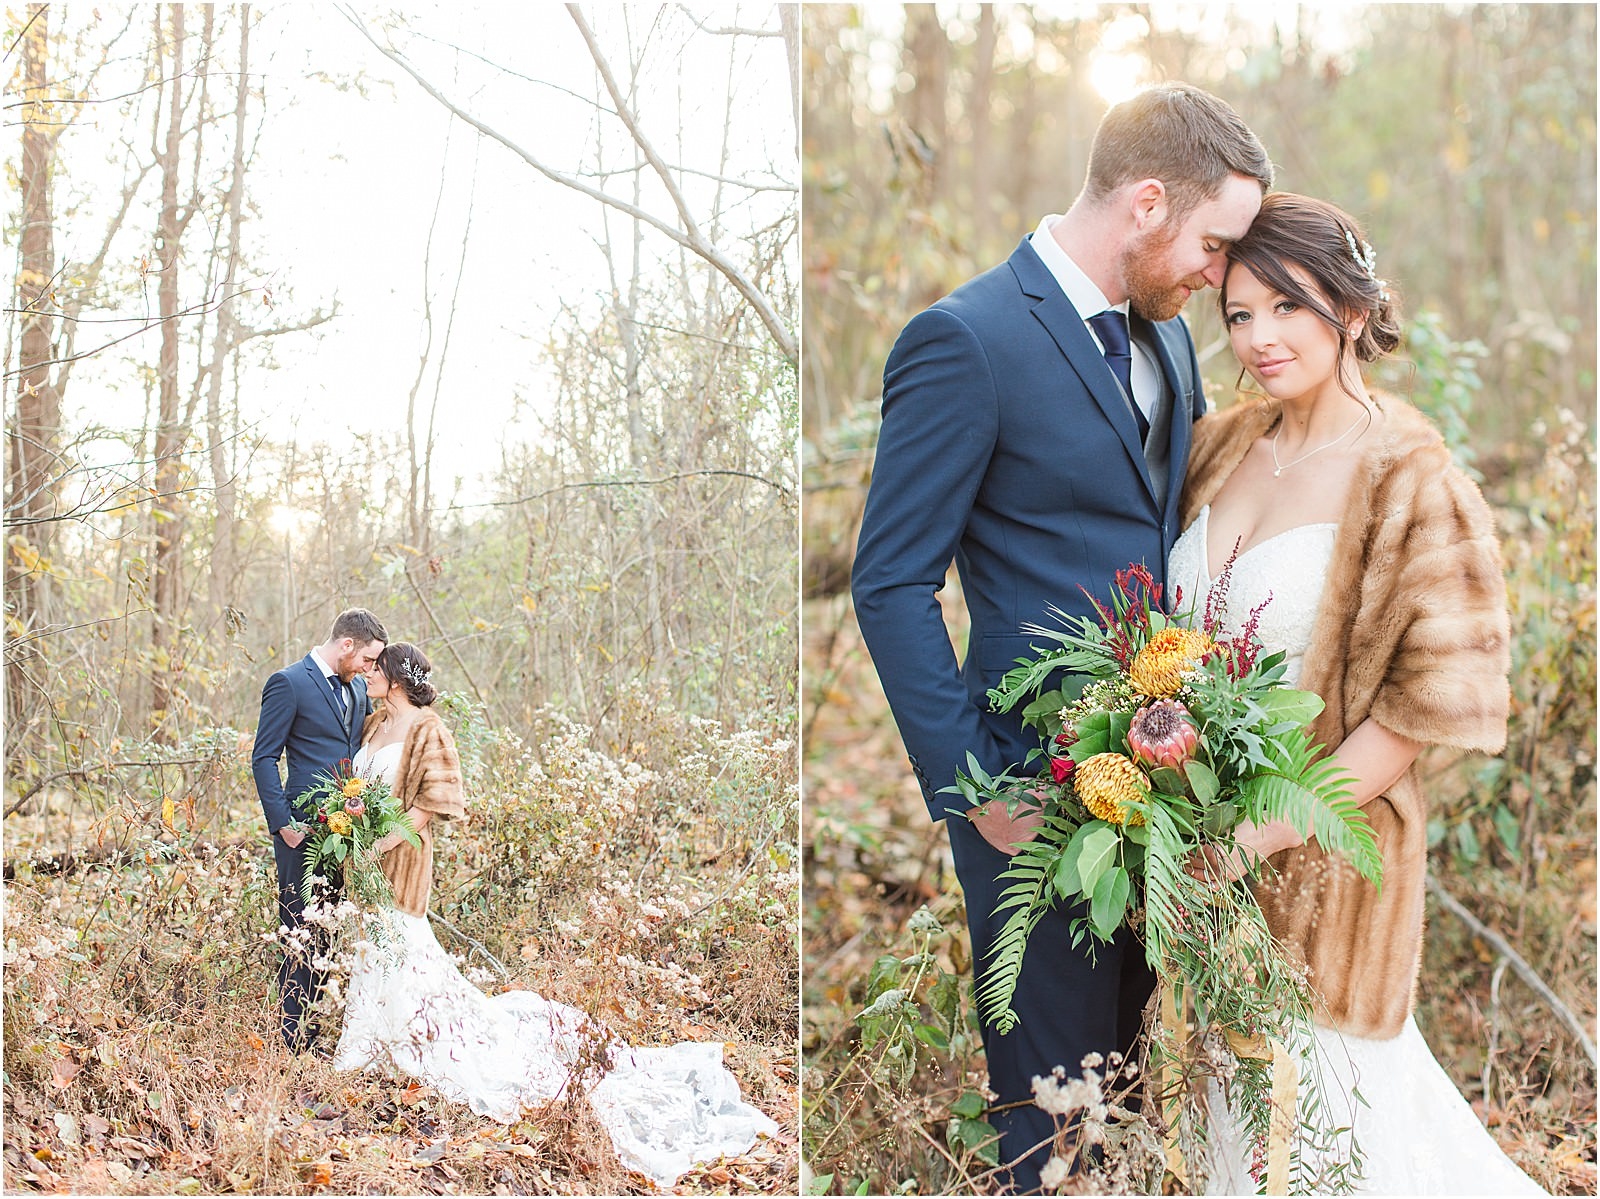 Walker and Alyssa's intimate fall wedding in Southern Indiana. | Wedding Photography | The Corner House Wedding | Southern Indiana Wedding | #fallwedding #intimatewedding | 076.jpg